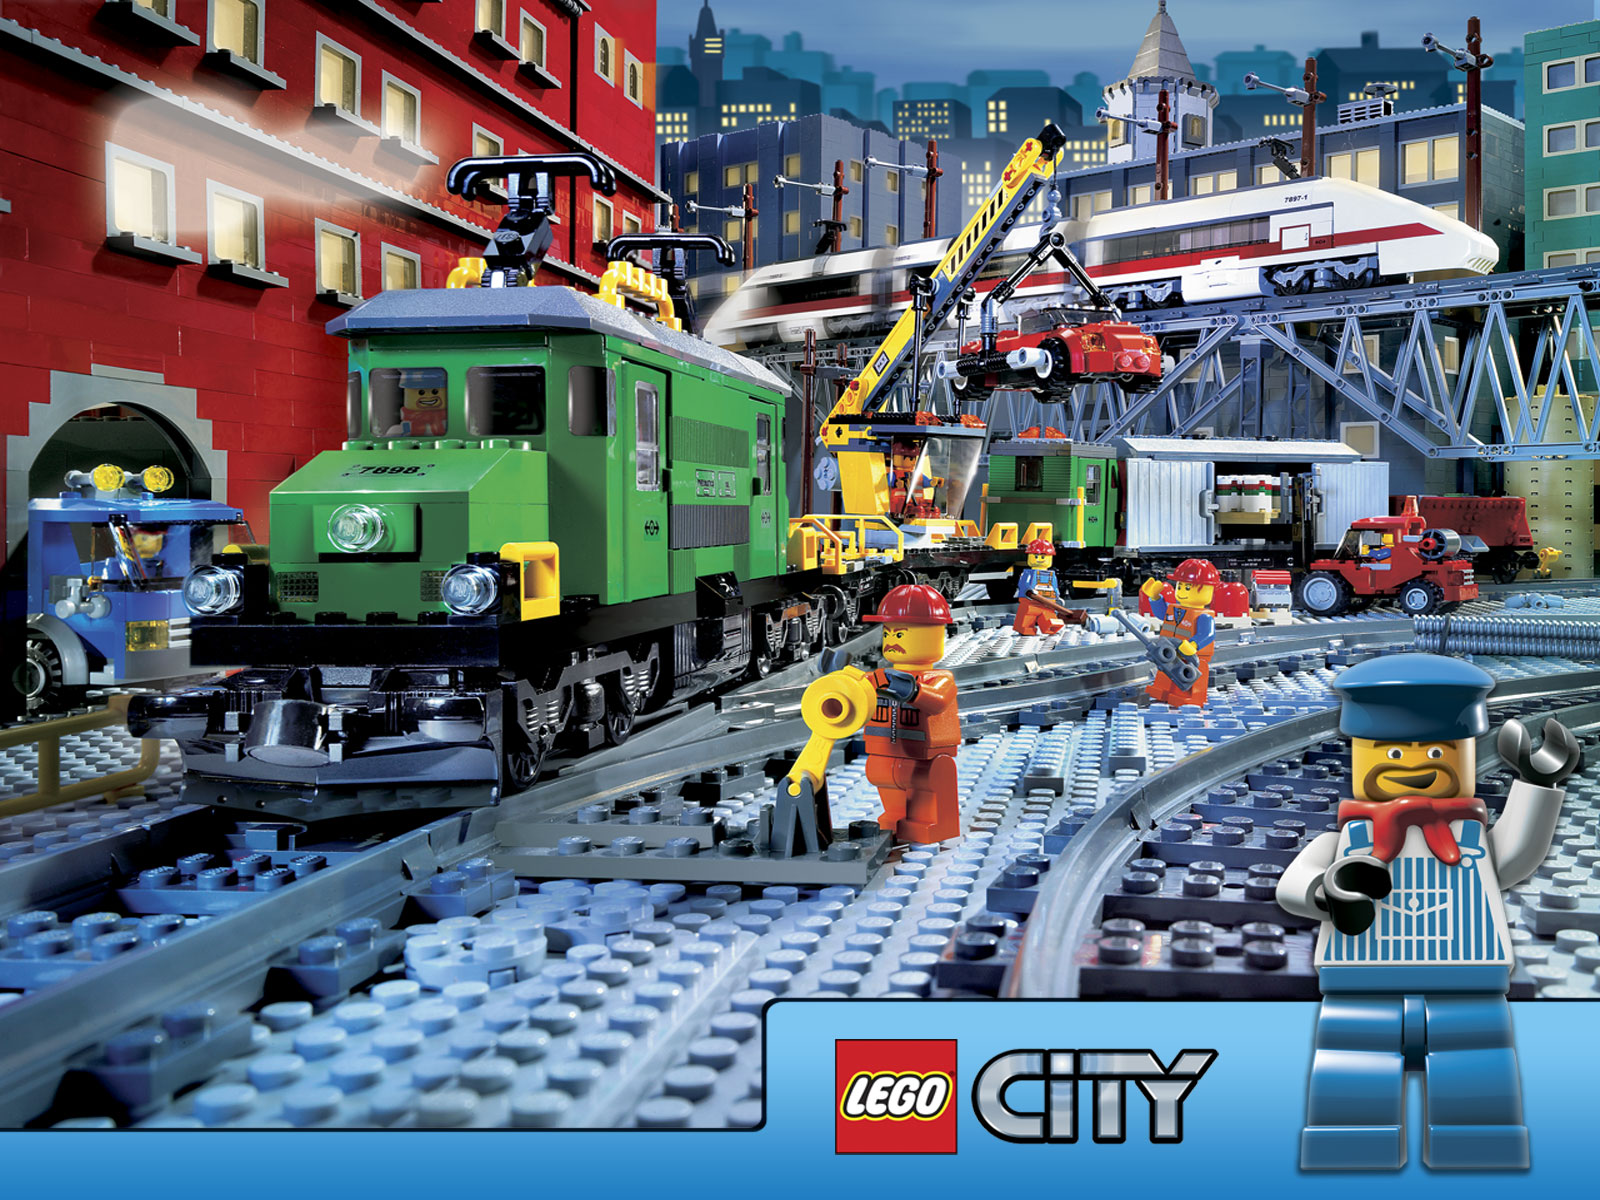 Lego City Desktop Wallpaper For HD Widescreen And